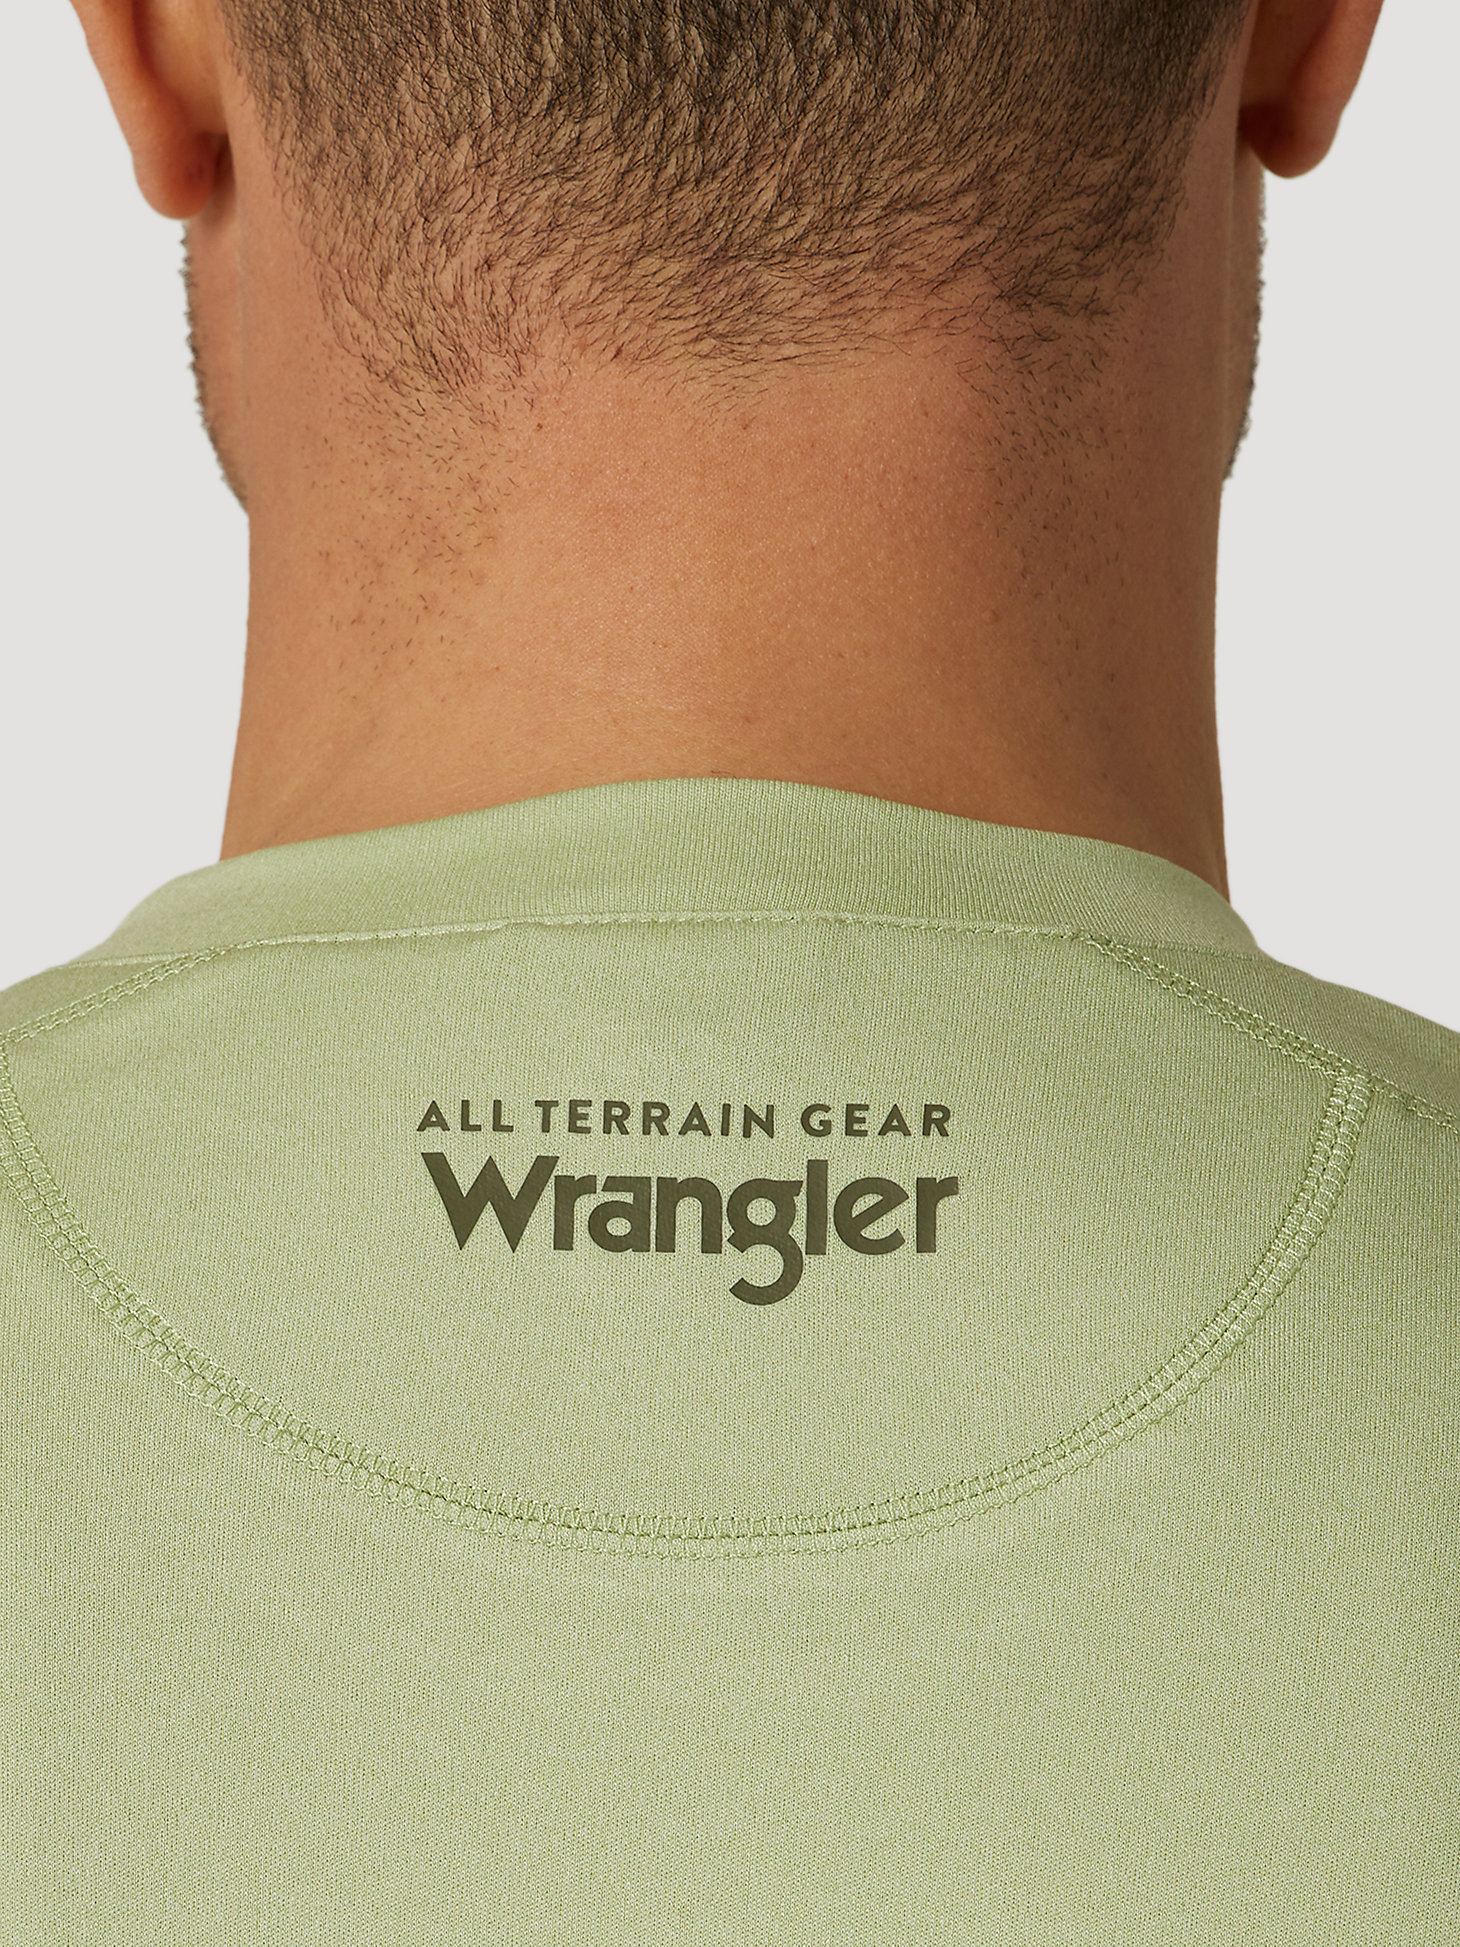 ATG by Wrangler™ Men's Performance Shirt in Reseda alternative view 7